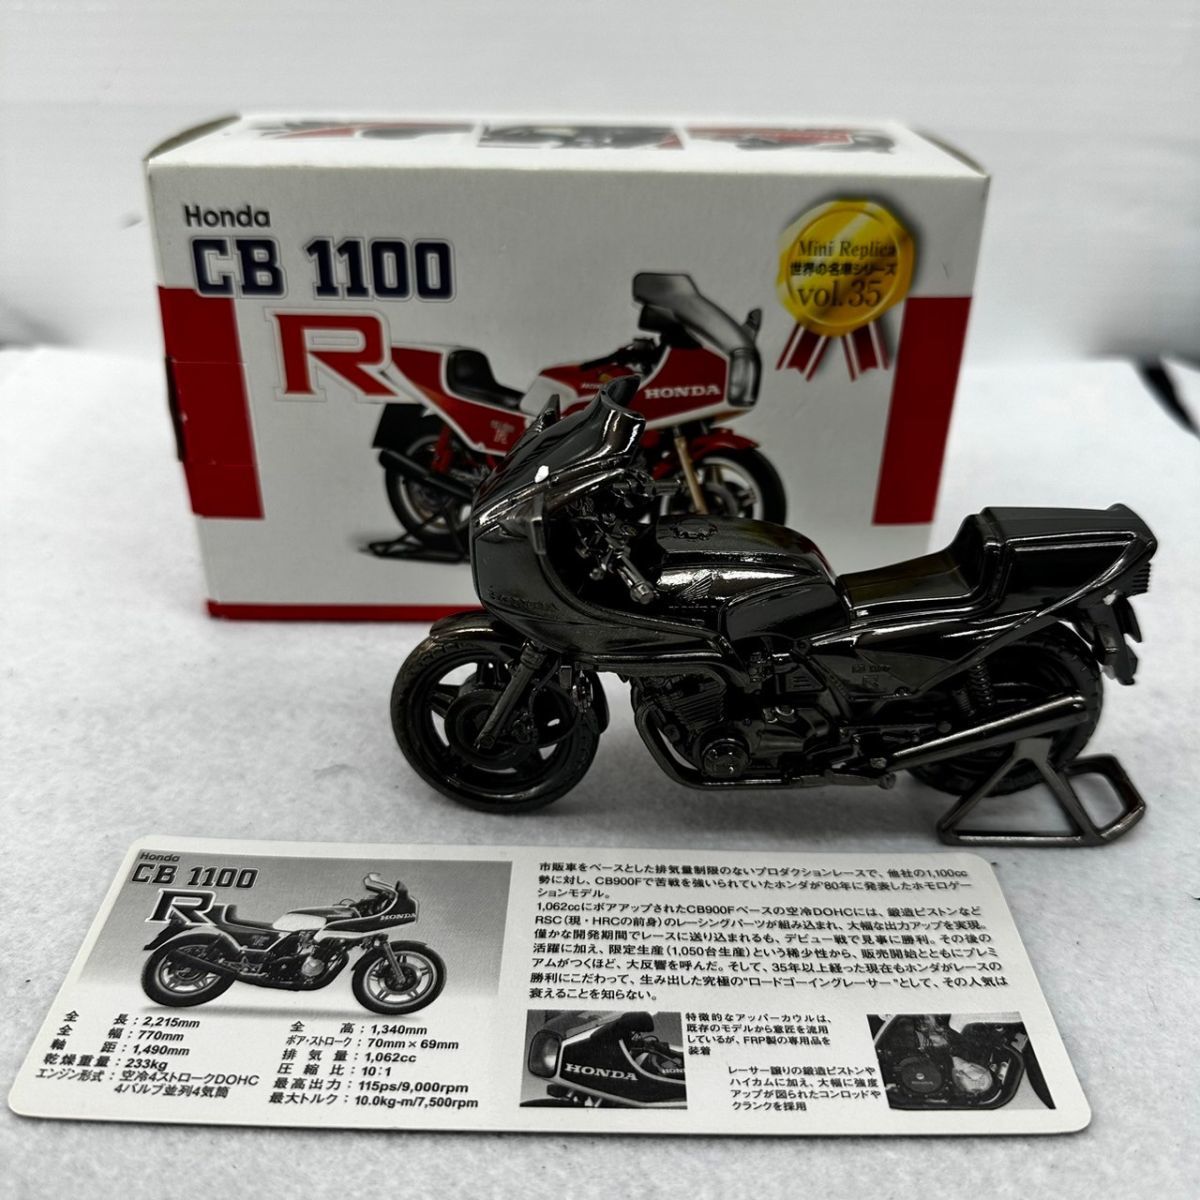 G604-C4-771 世界の名車シリーズ Vol.35 HONDA ホンダ CBR CB1100R バイク 模型 レプリカ 置物 レッドバロン 箱付き 約横14×縦8cm ②_画像1